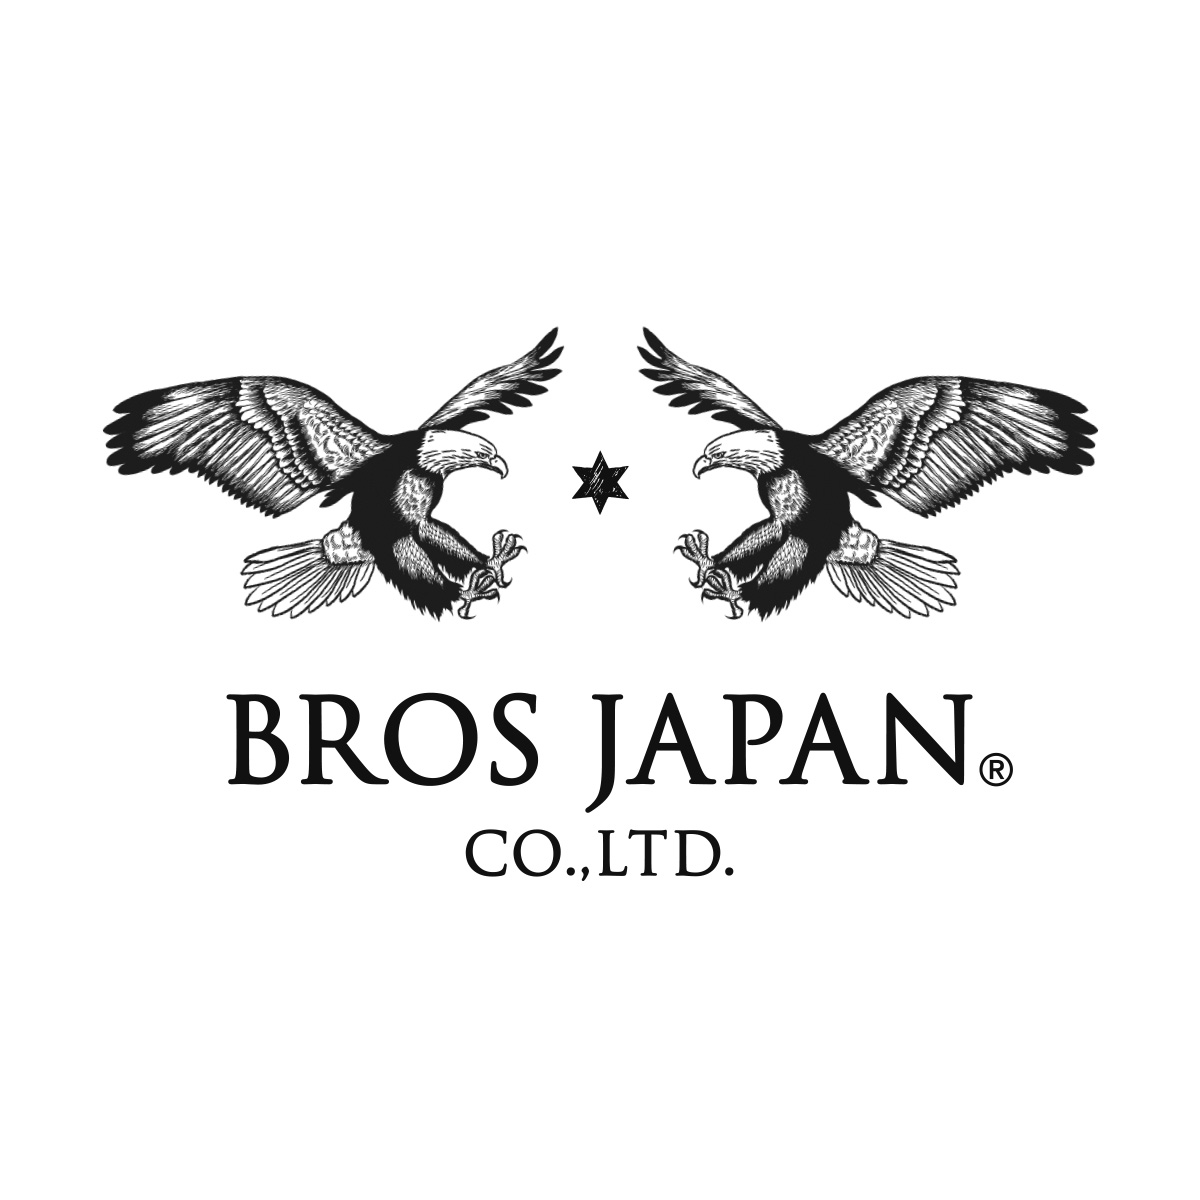 BROS JAPAN GROUP